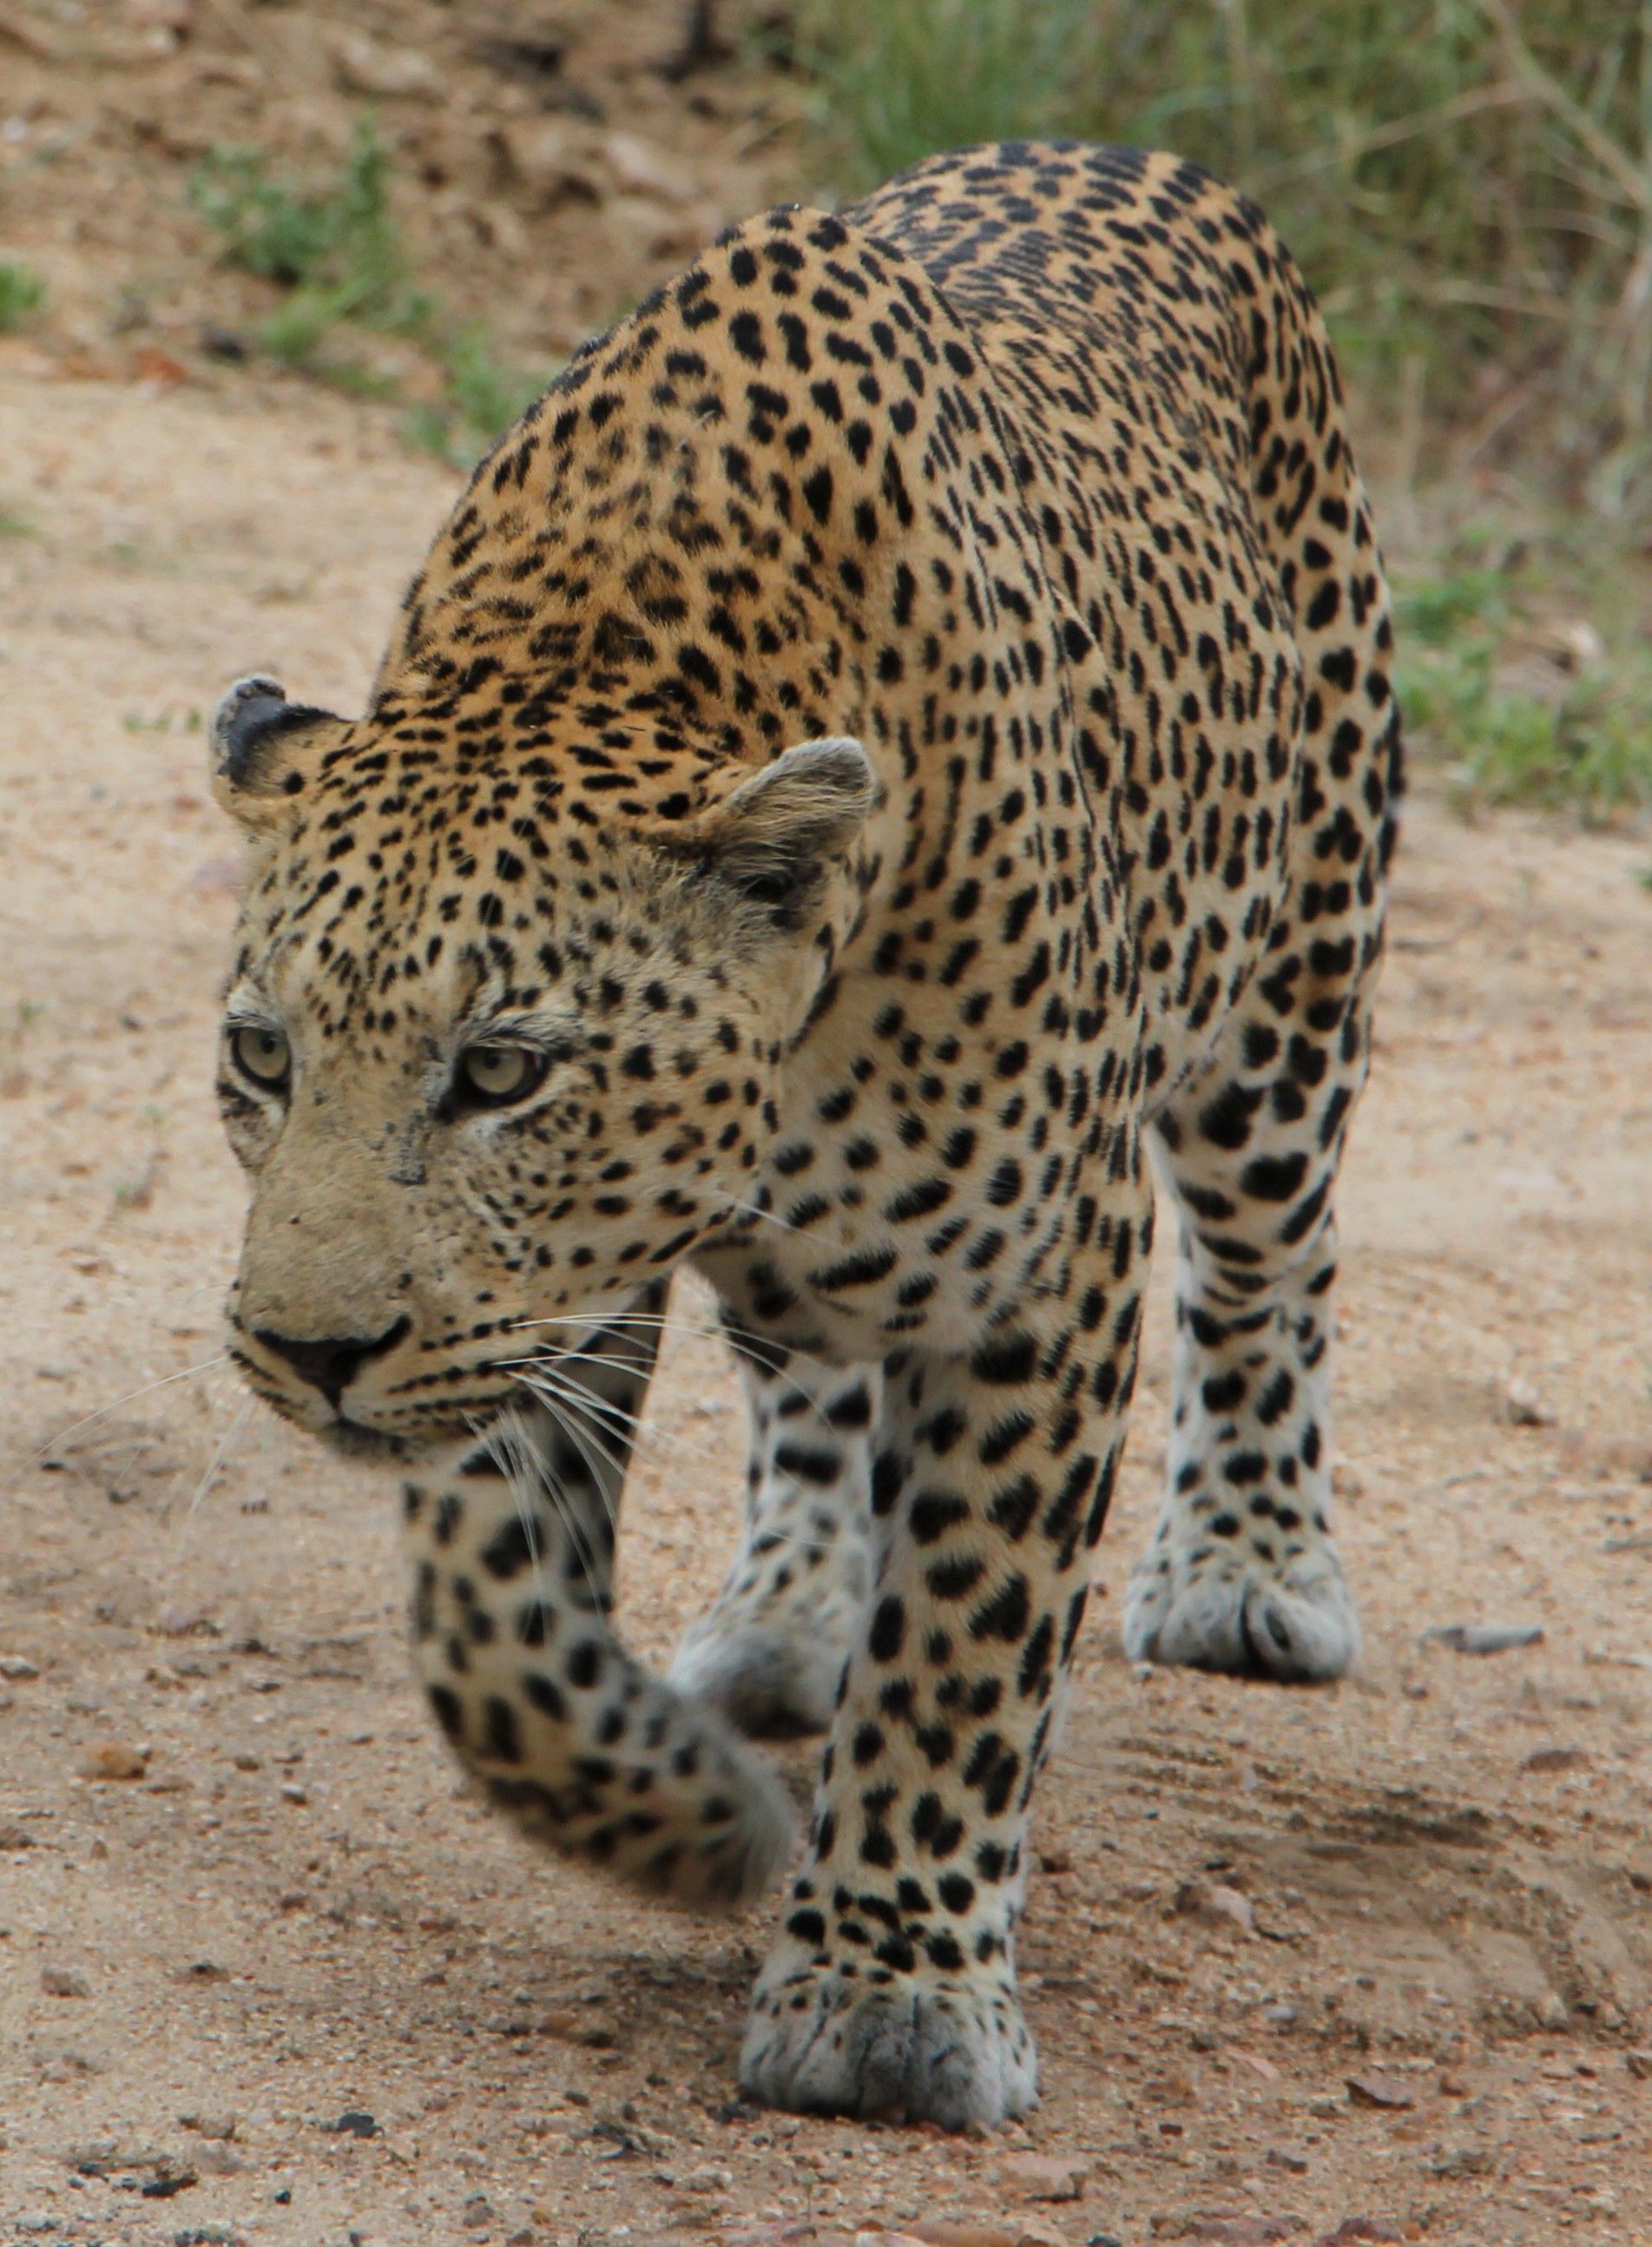 STALKING LEOPARD | WILDLIFE | Pinterest | Leopards, Wildlife and Animal